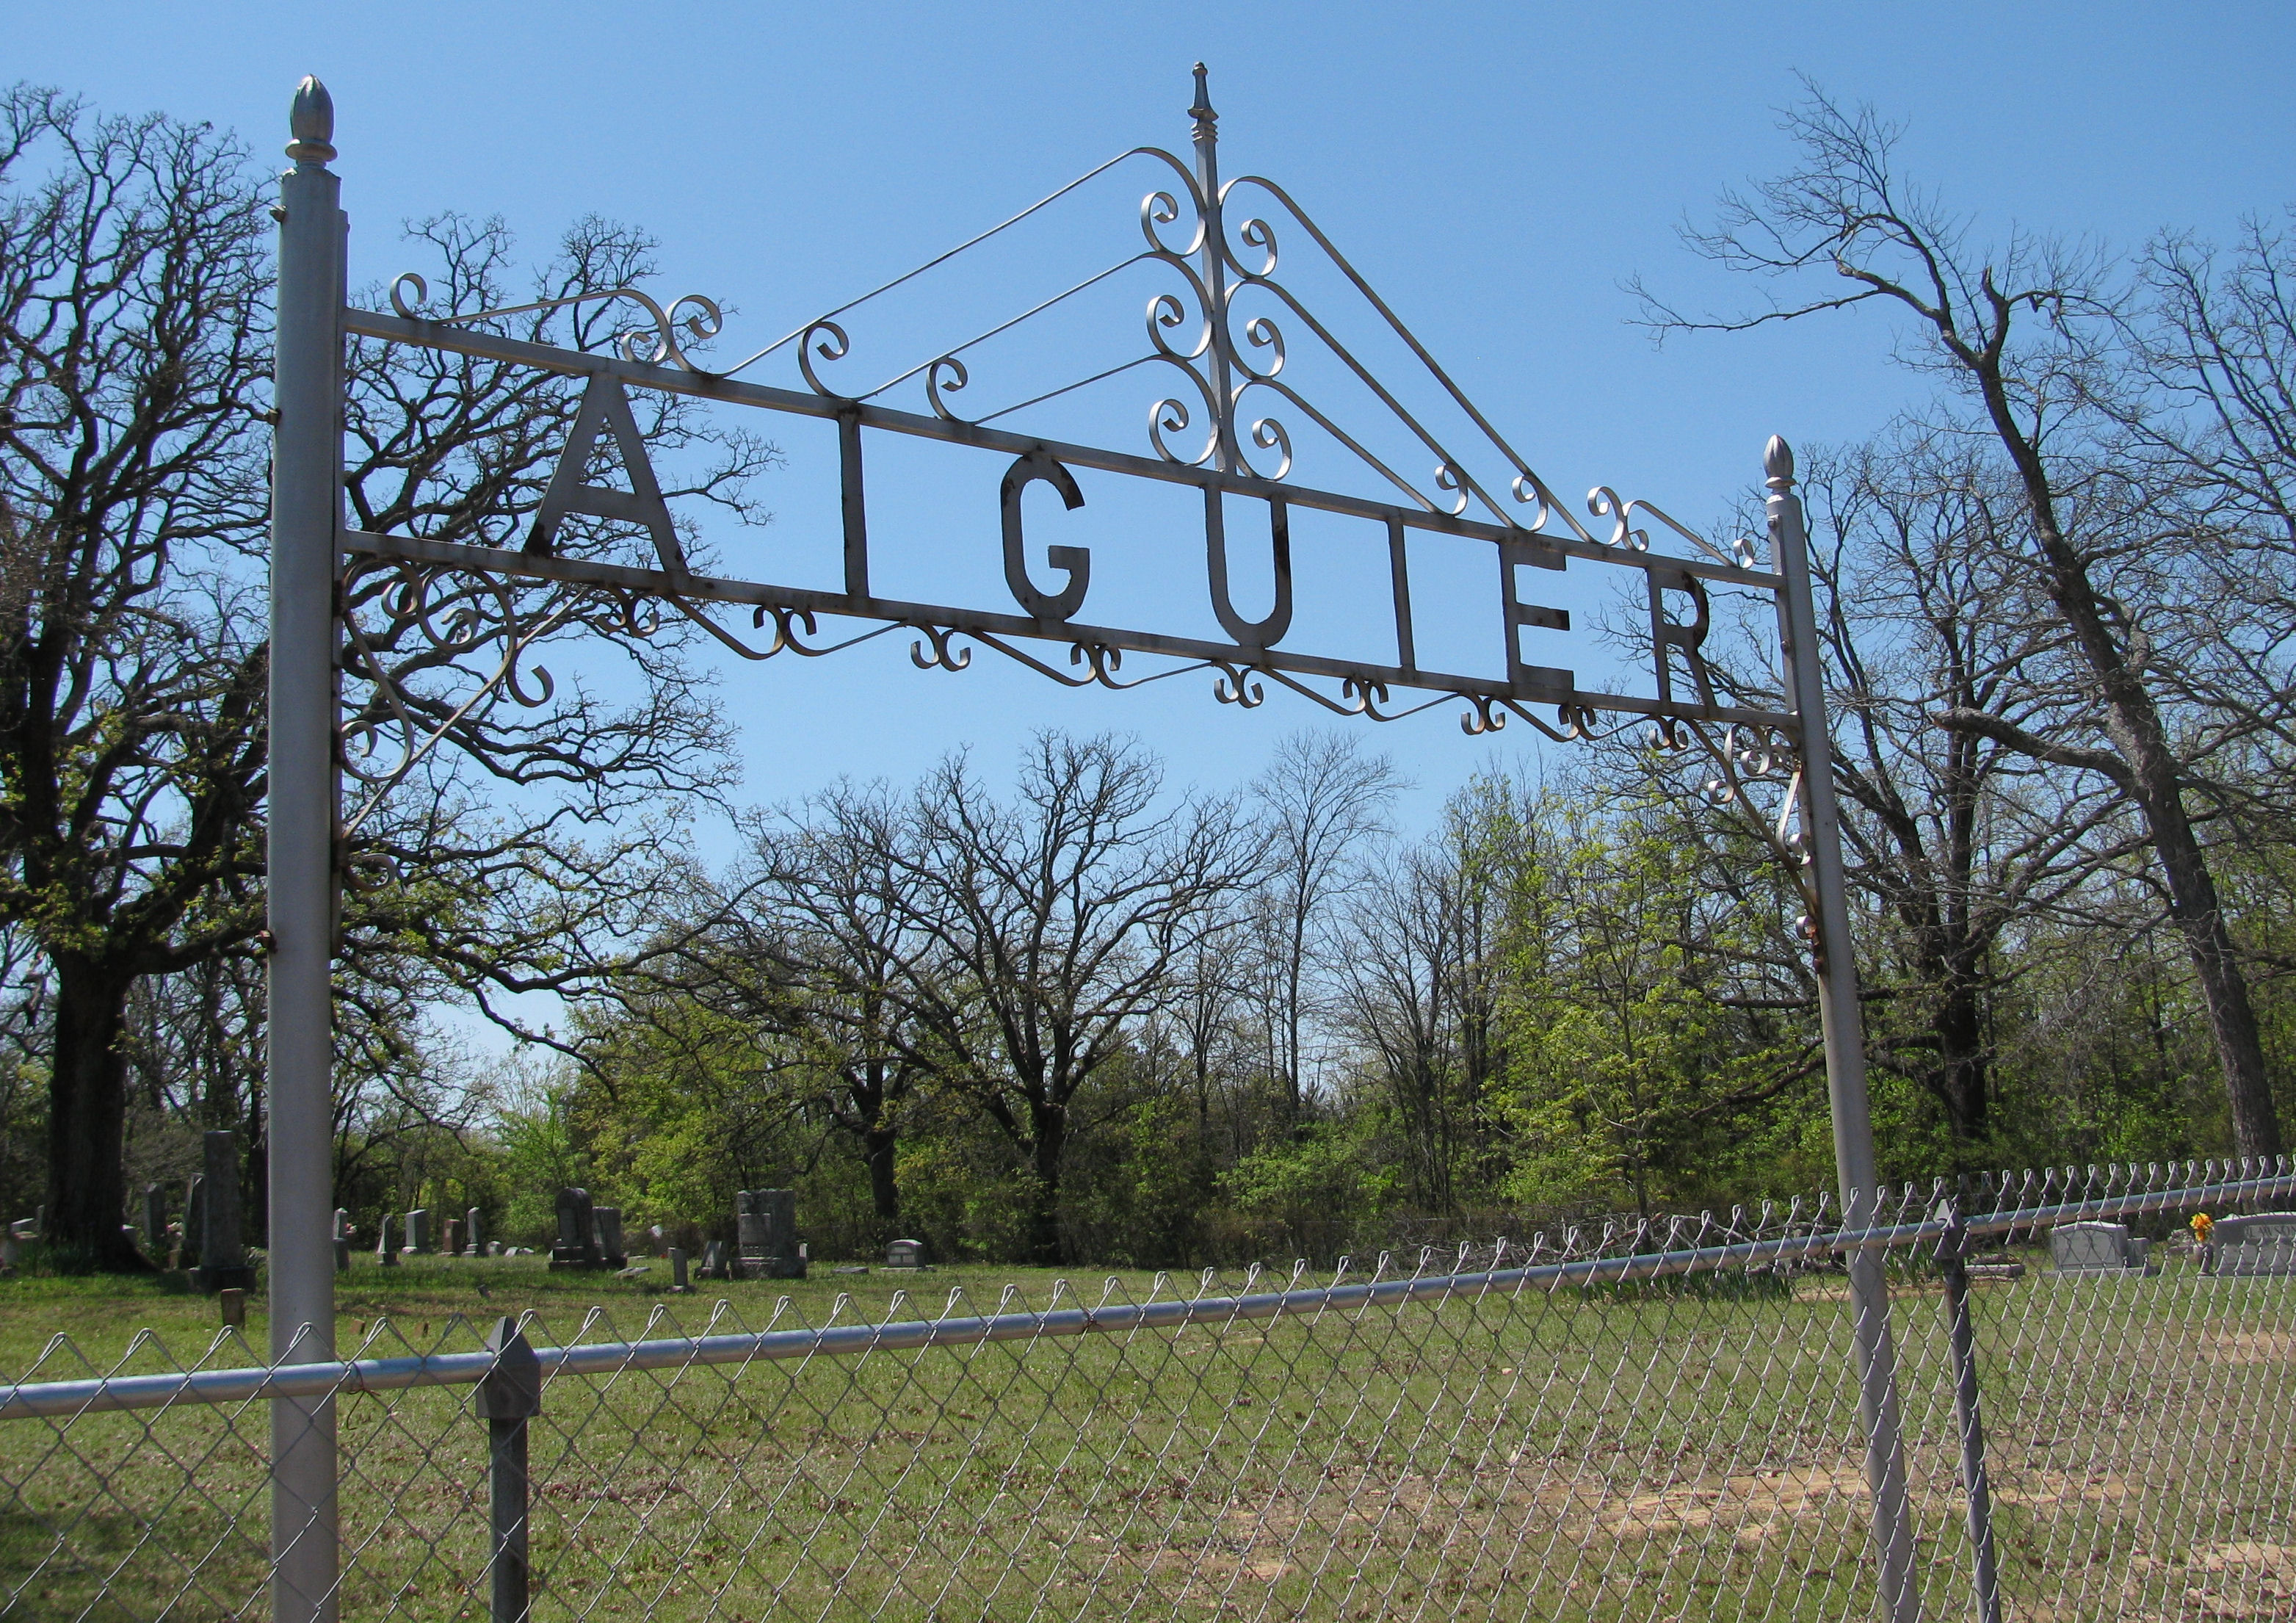 Aiguier Cemetery Association Cancels Annual Meeting